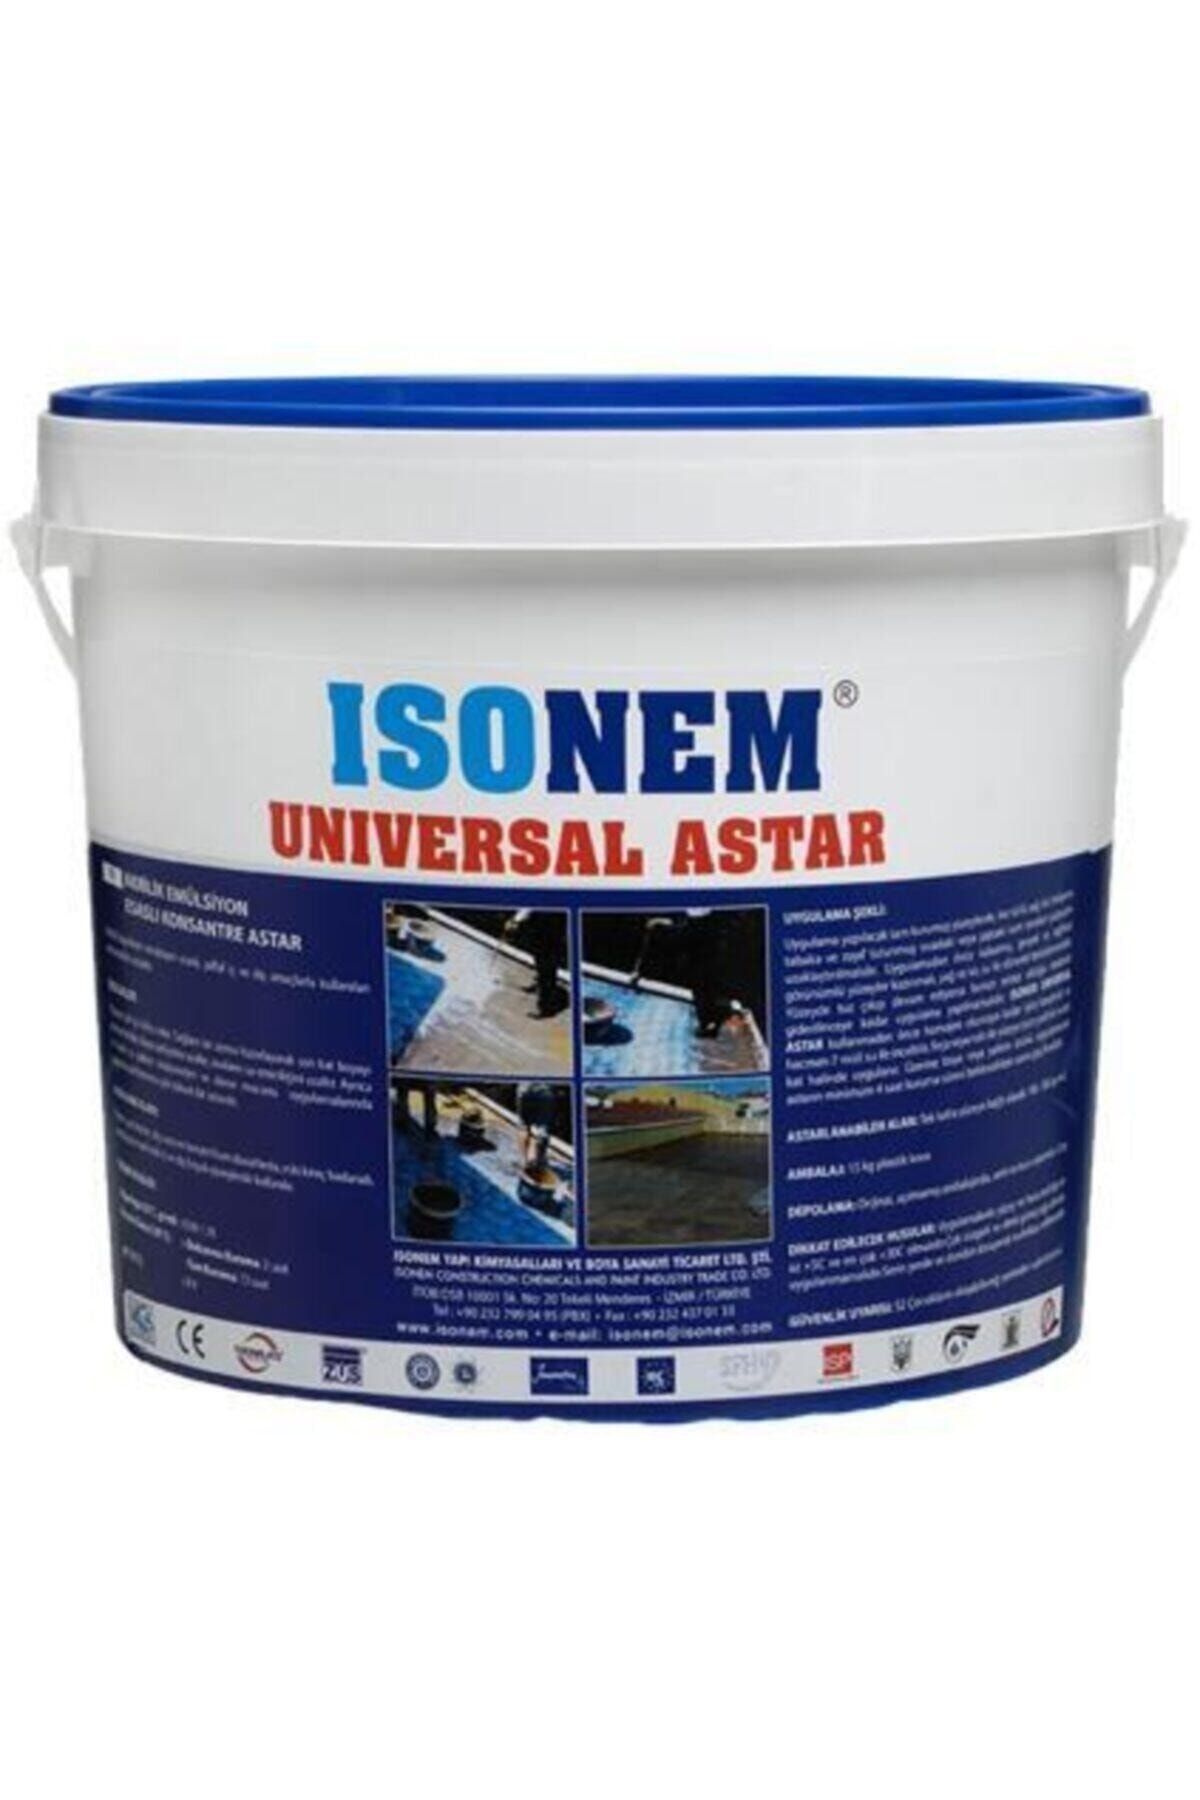 Isonem Unıversal Astar Akrilik Emülsiyon Esaslı Konsantre Astar 1 Kg 900141